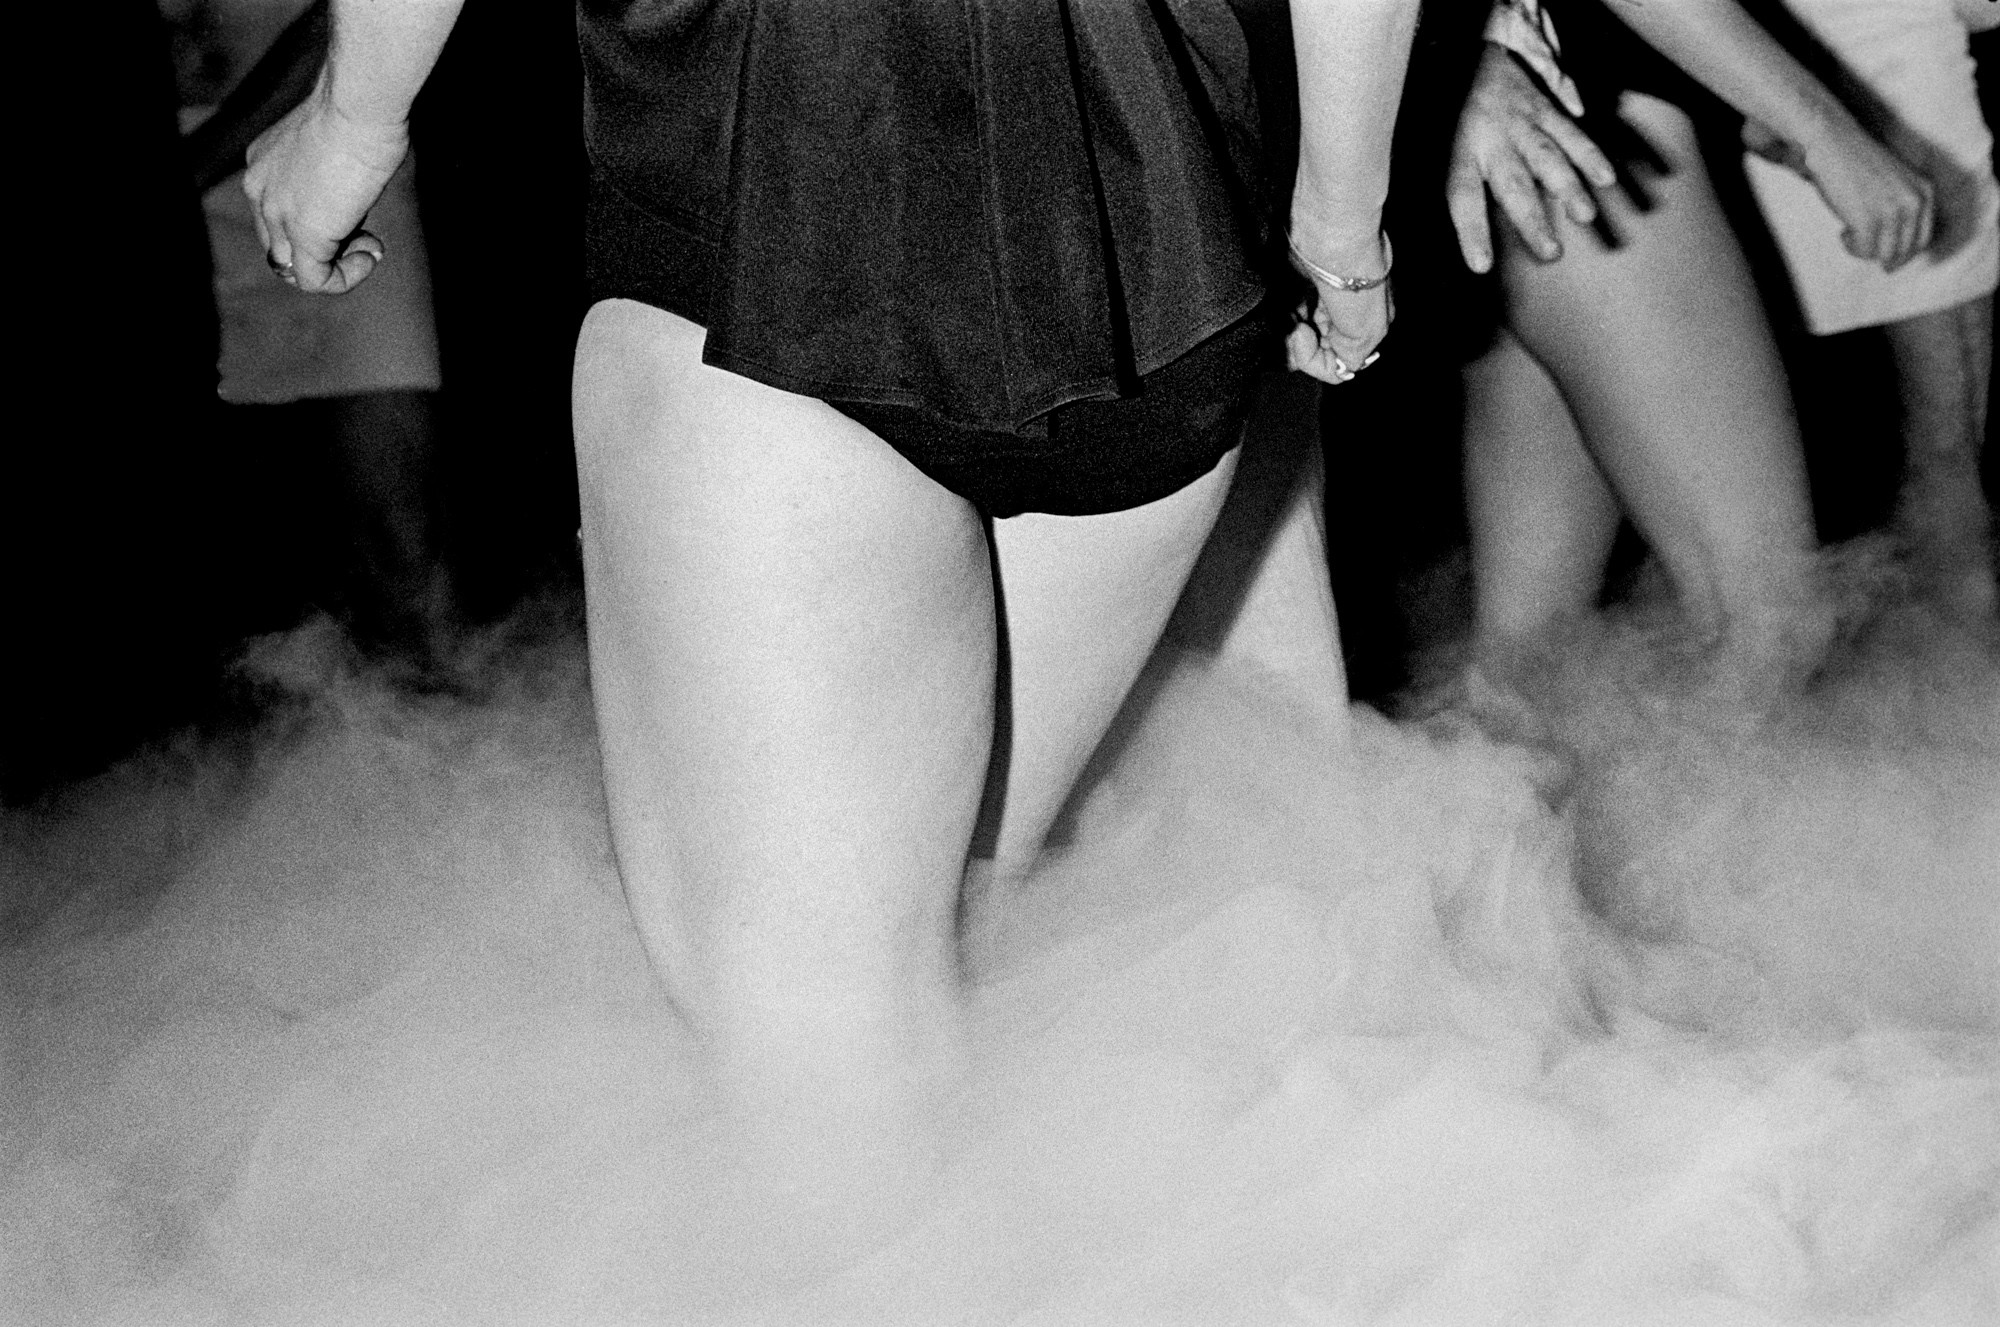 Black Swingers New York - A wild ride through a 70s New York sex club